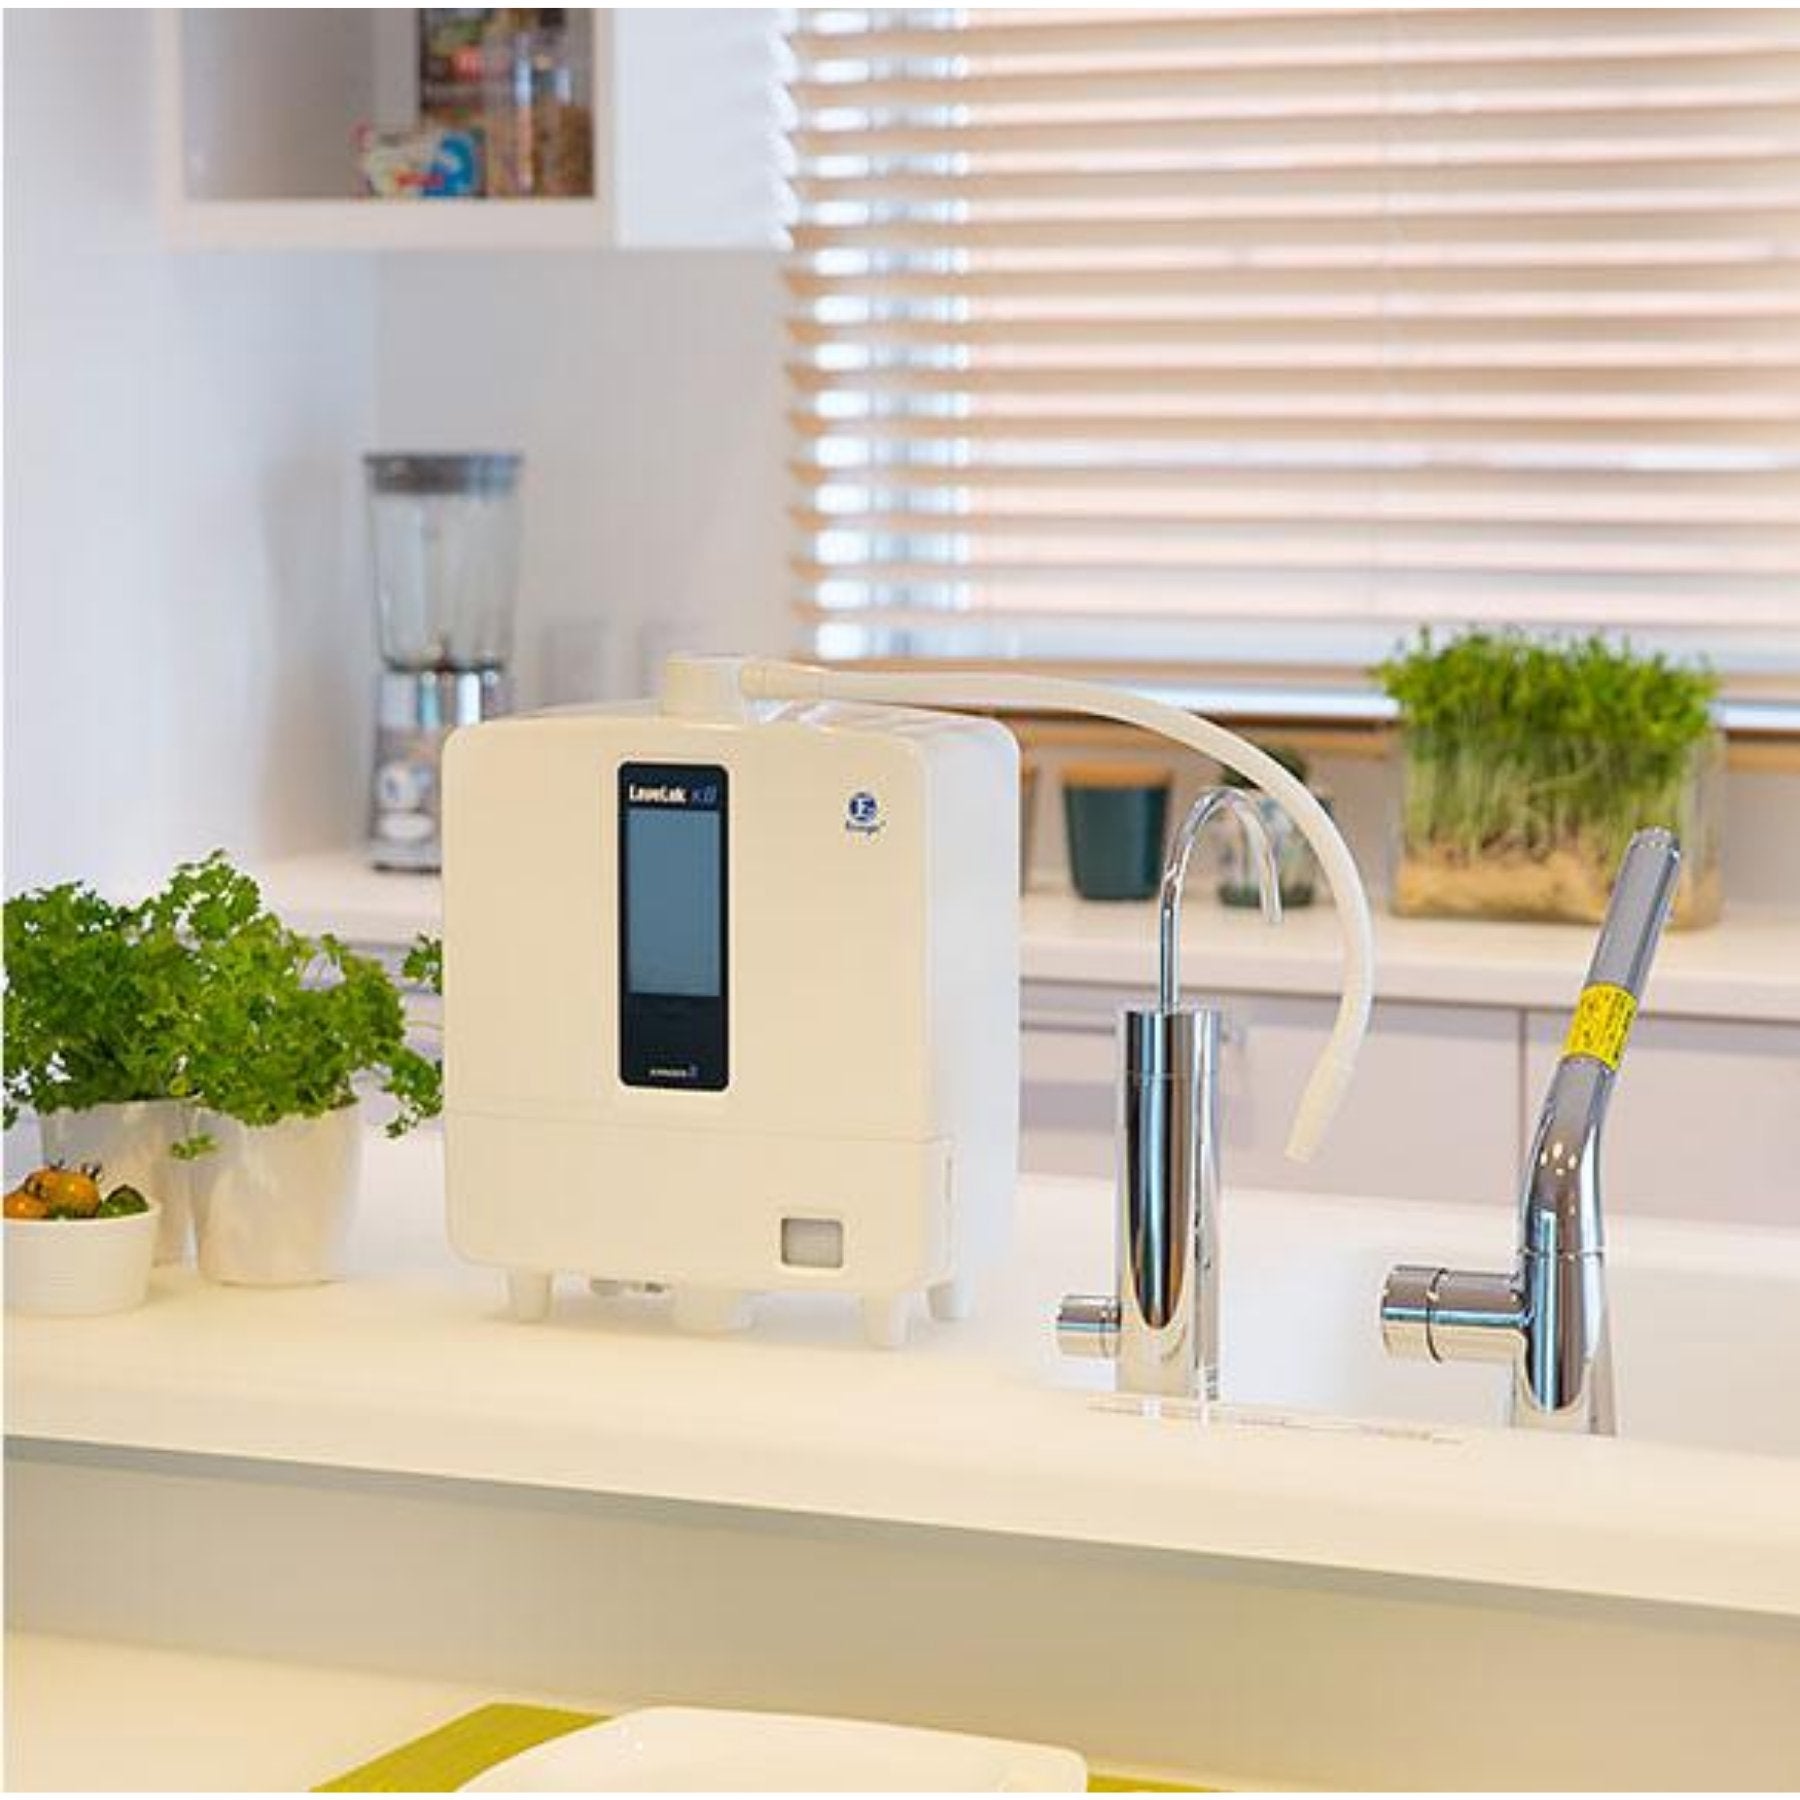 Kangen Water Machine (Leveluk K8, Leveluk SD501 Platinum, Leveluk SD501 Alkaline Water Ionizer) - Quality Water Treatment